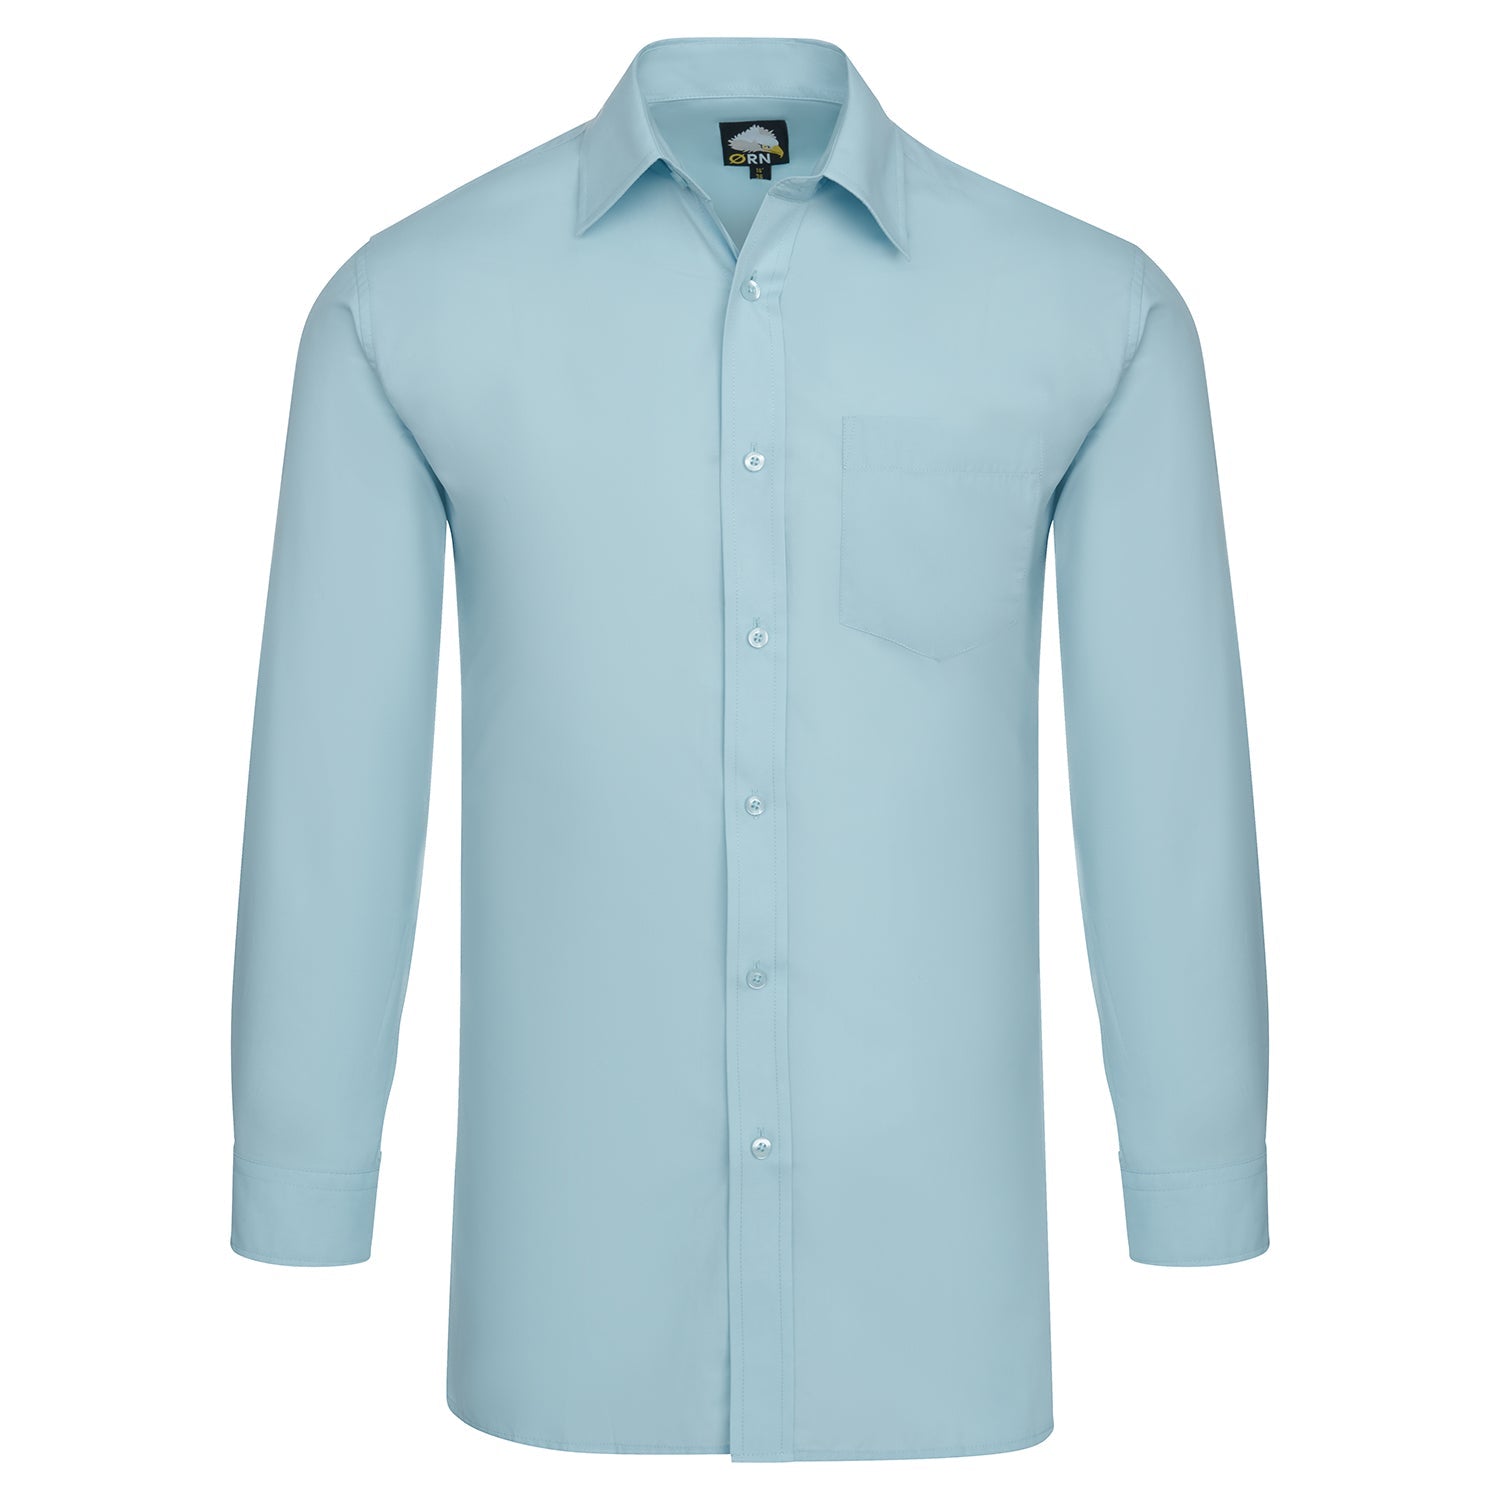 ORN Essential Long Sleeve Shirt - Sky Blue